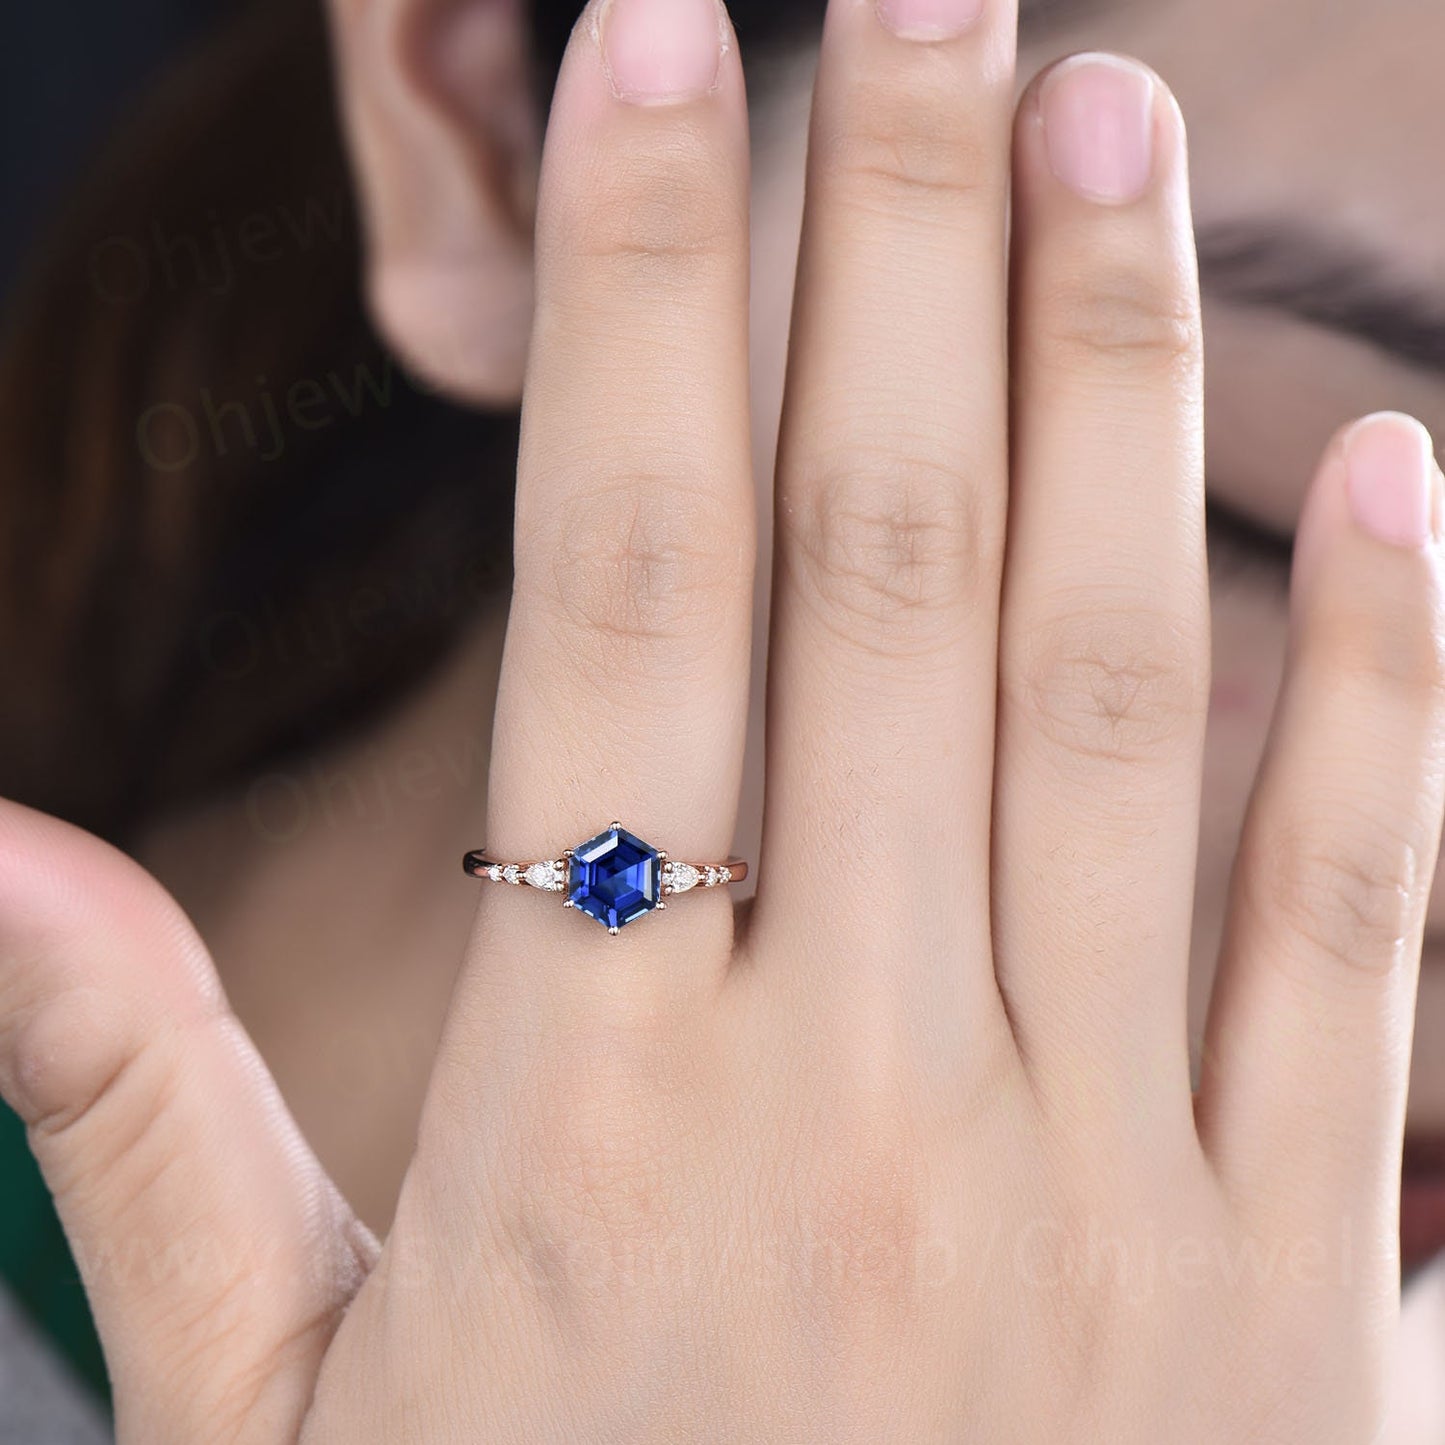 Hexagon cut sapphire ring gold vintage unique blue sapphire engagement ring set 14k rose gold dainty moissanite bridal ring set for women